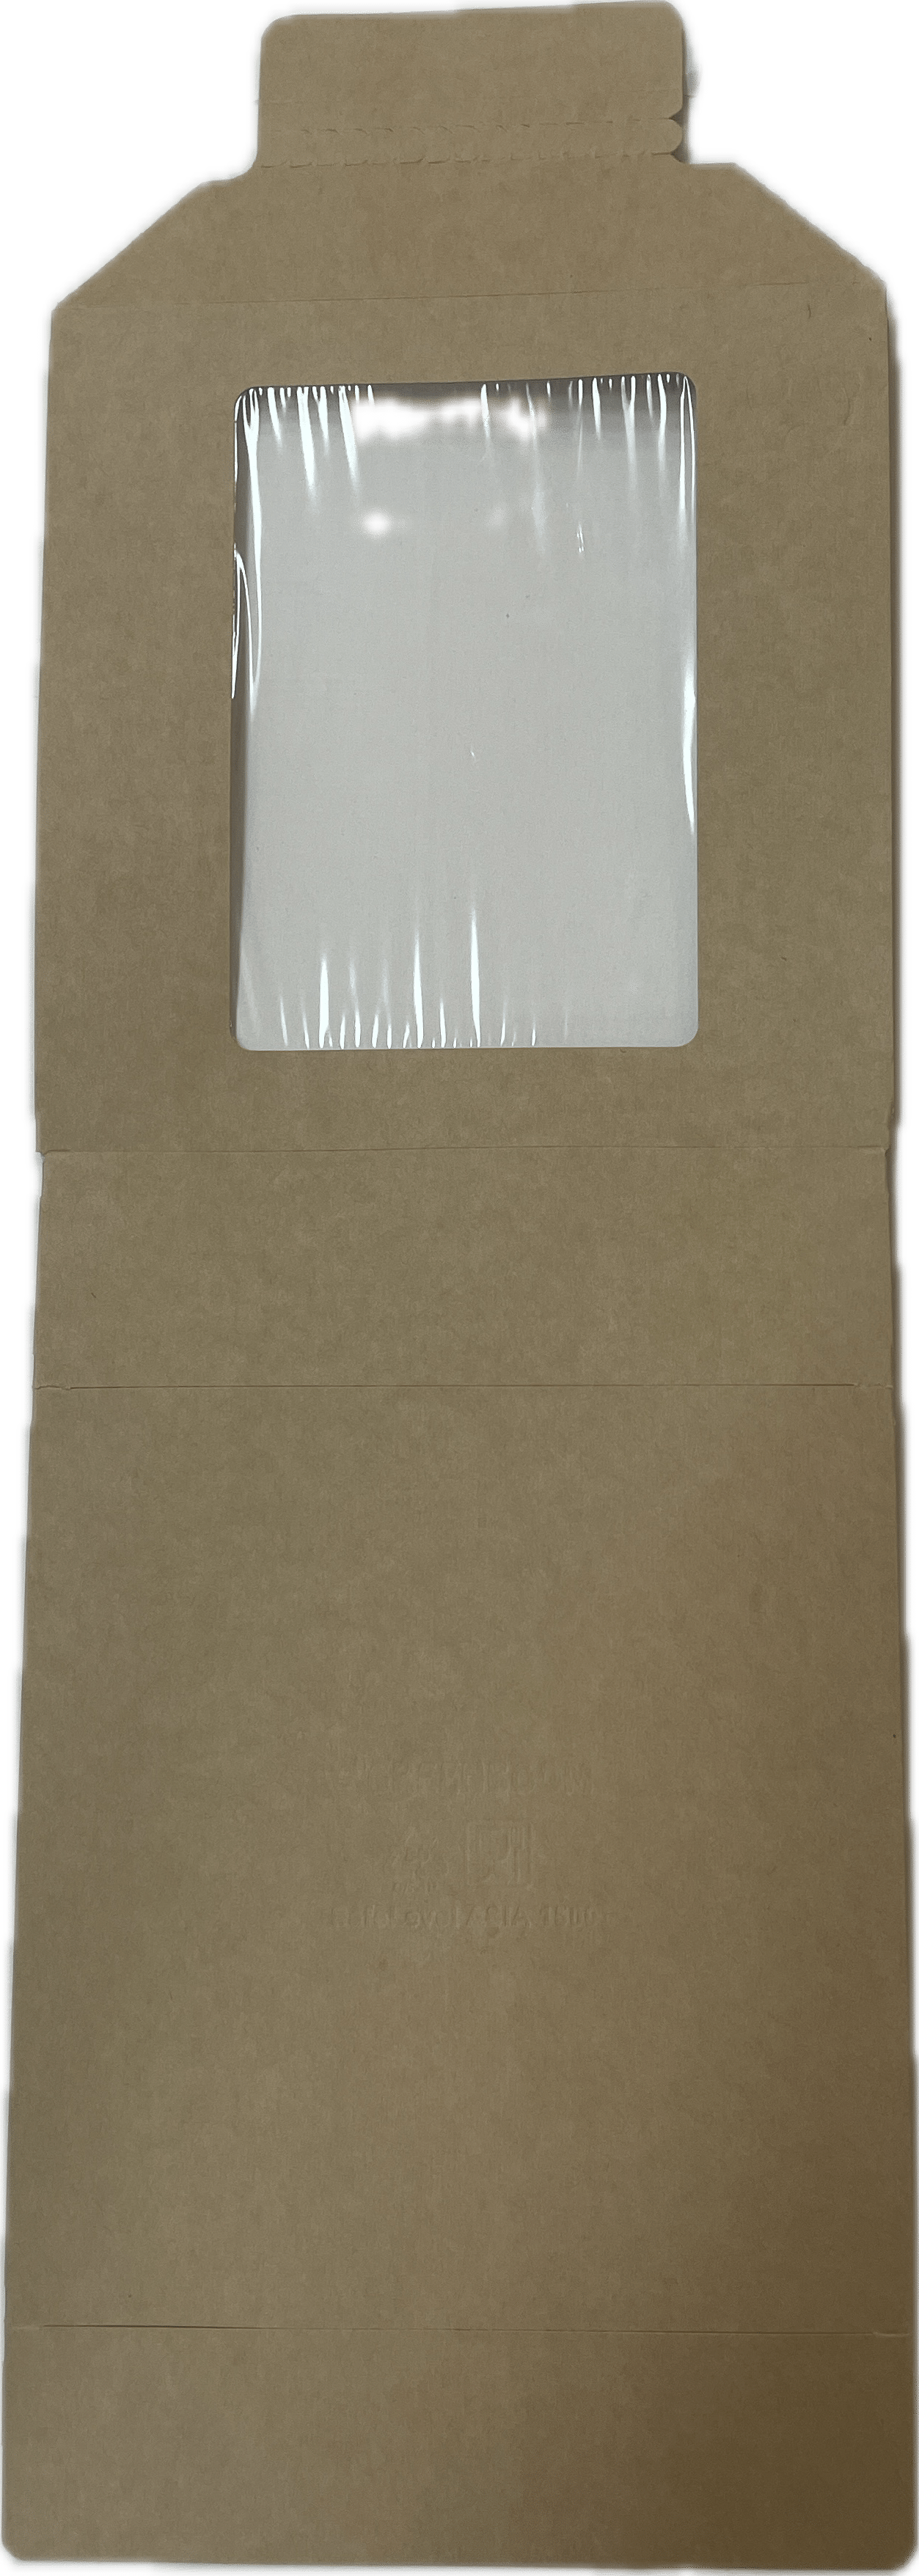 Коробка с окном 175х180х50 мм, отрывная лента